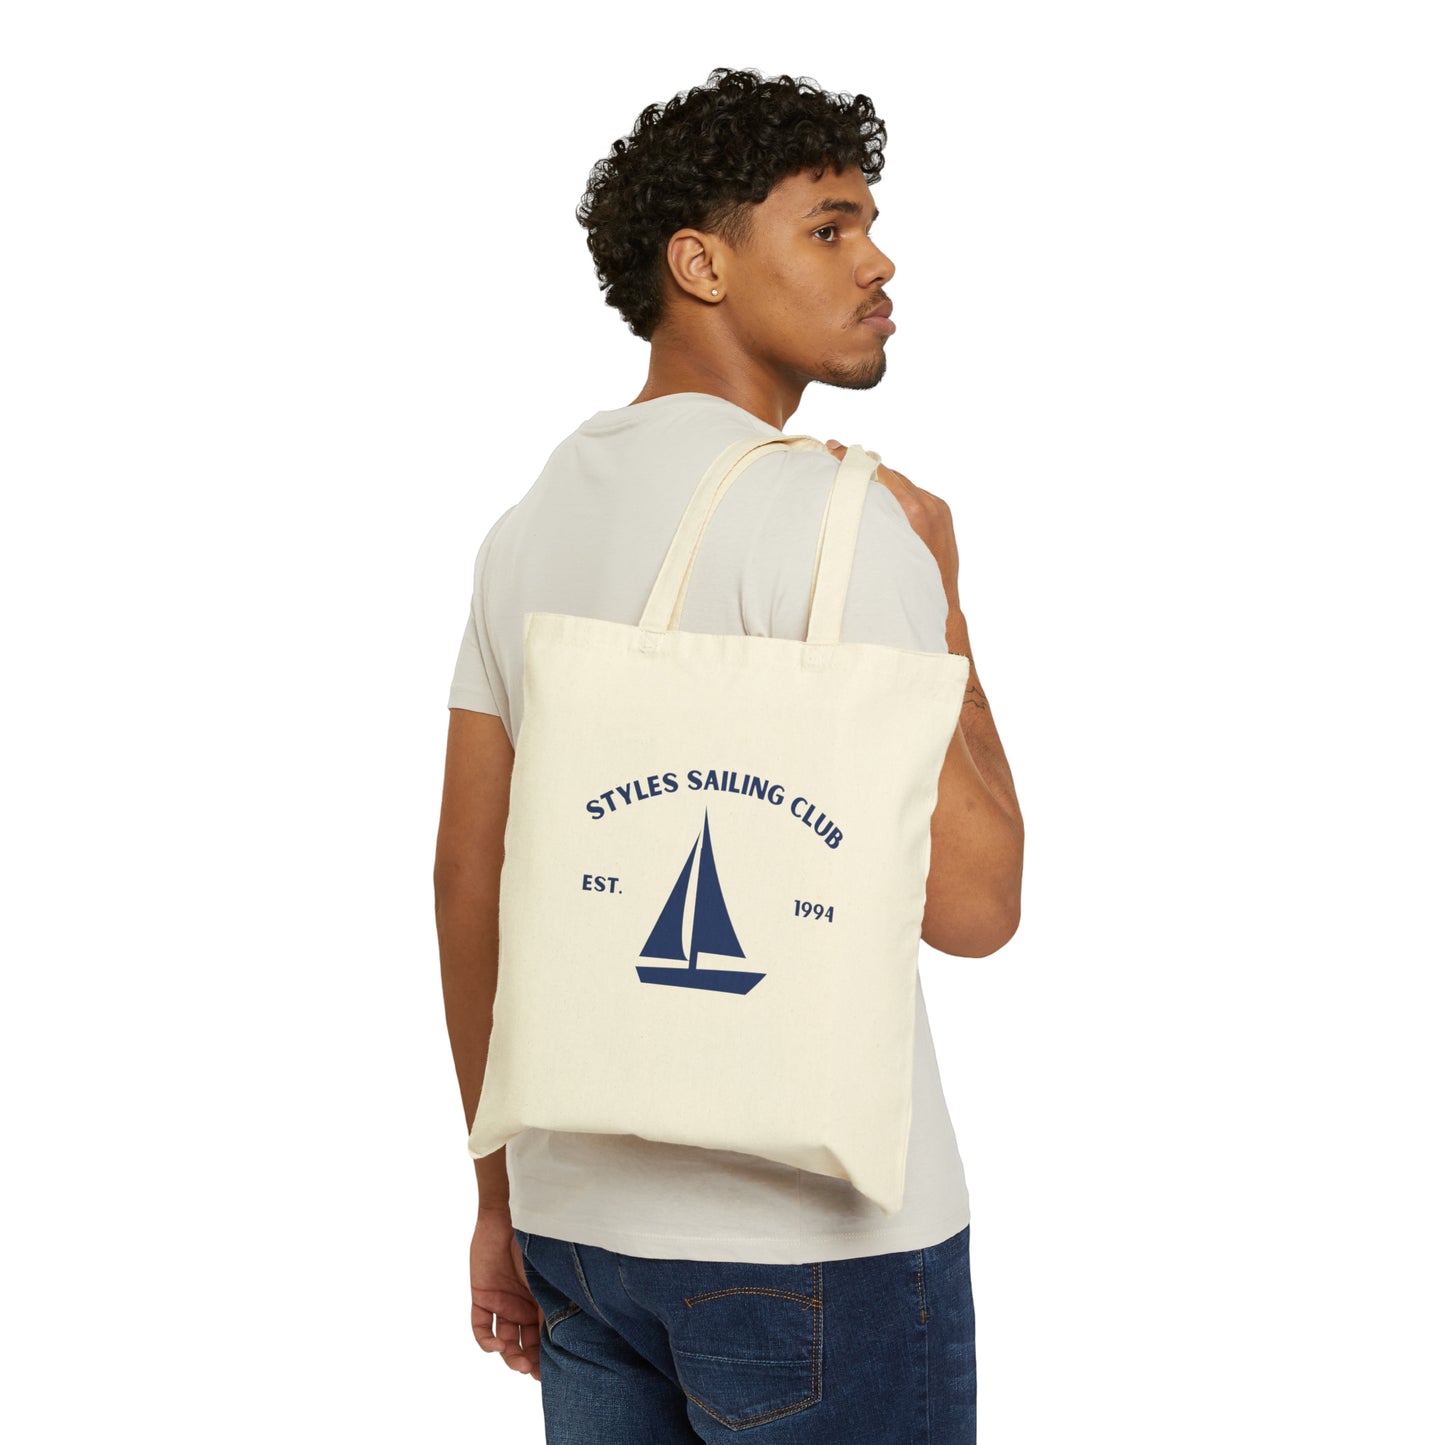 Styles Sailing Club Cotton Tote Bag